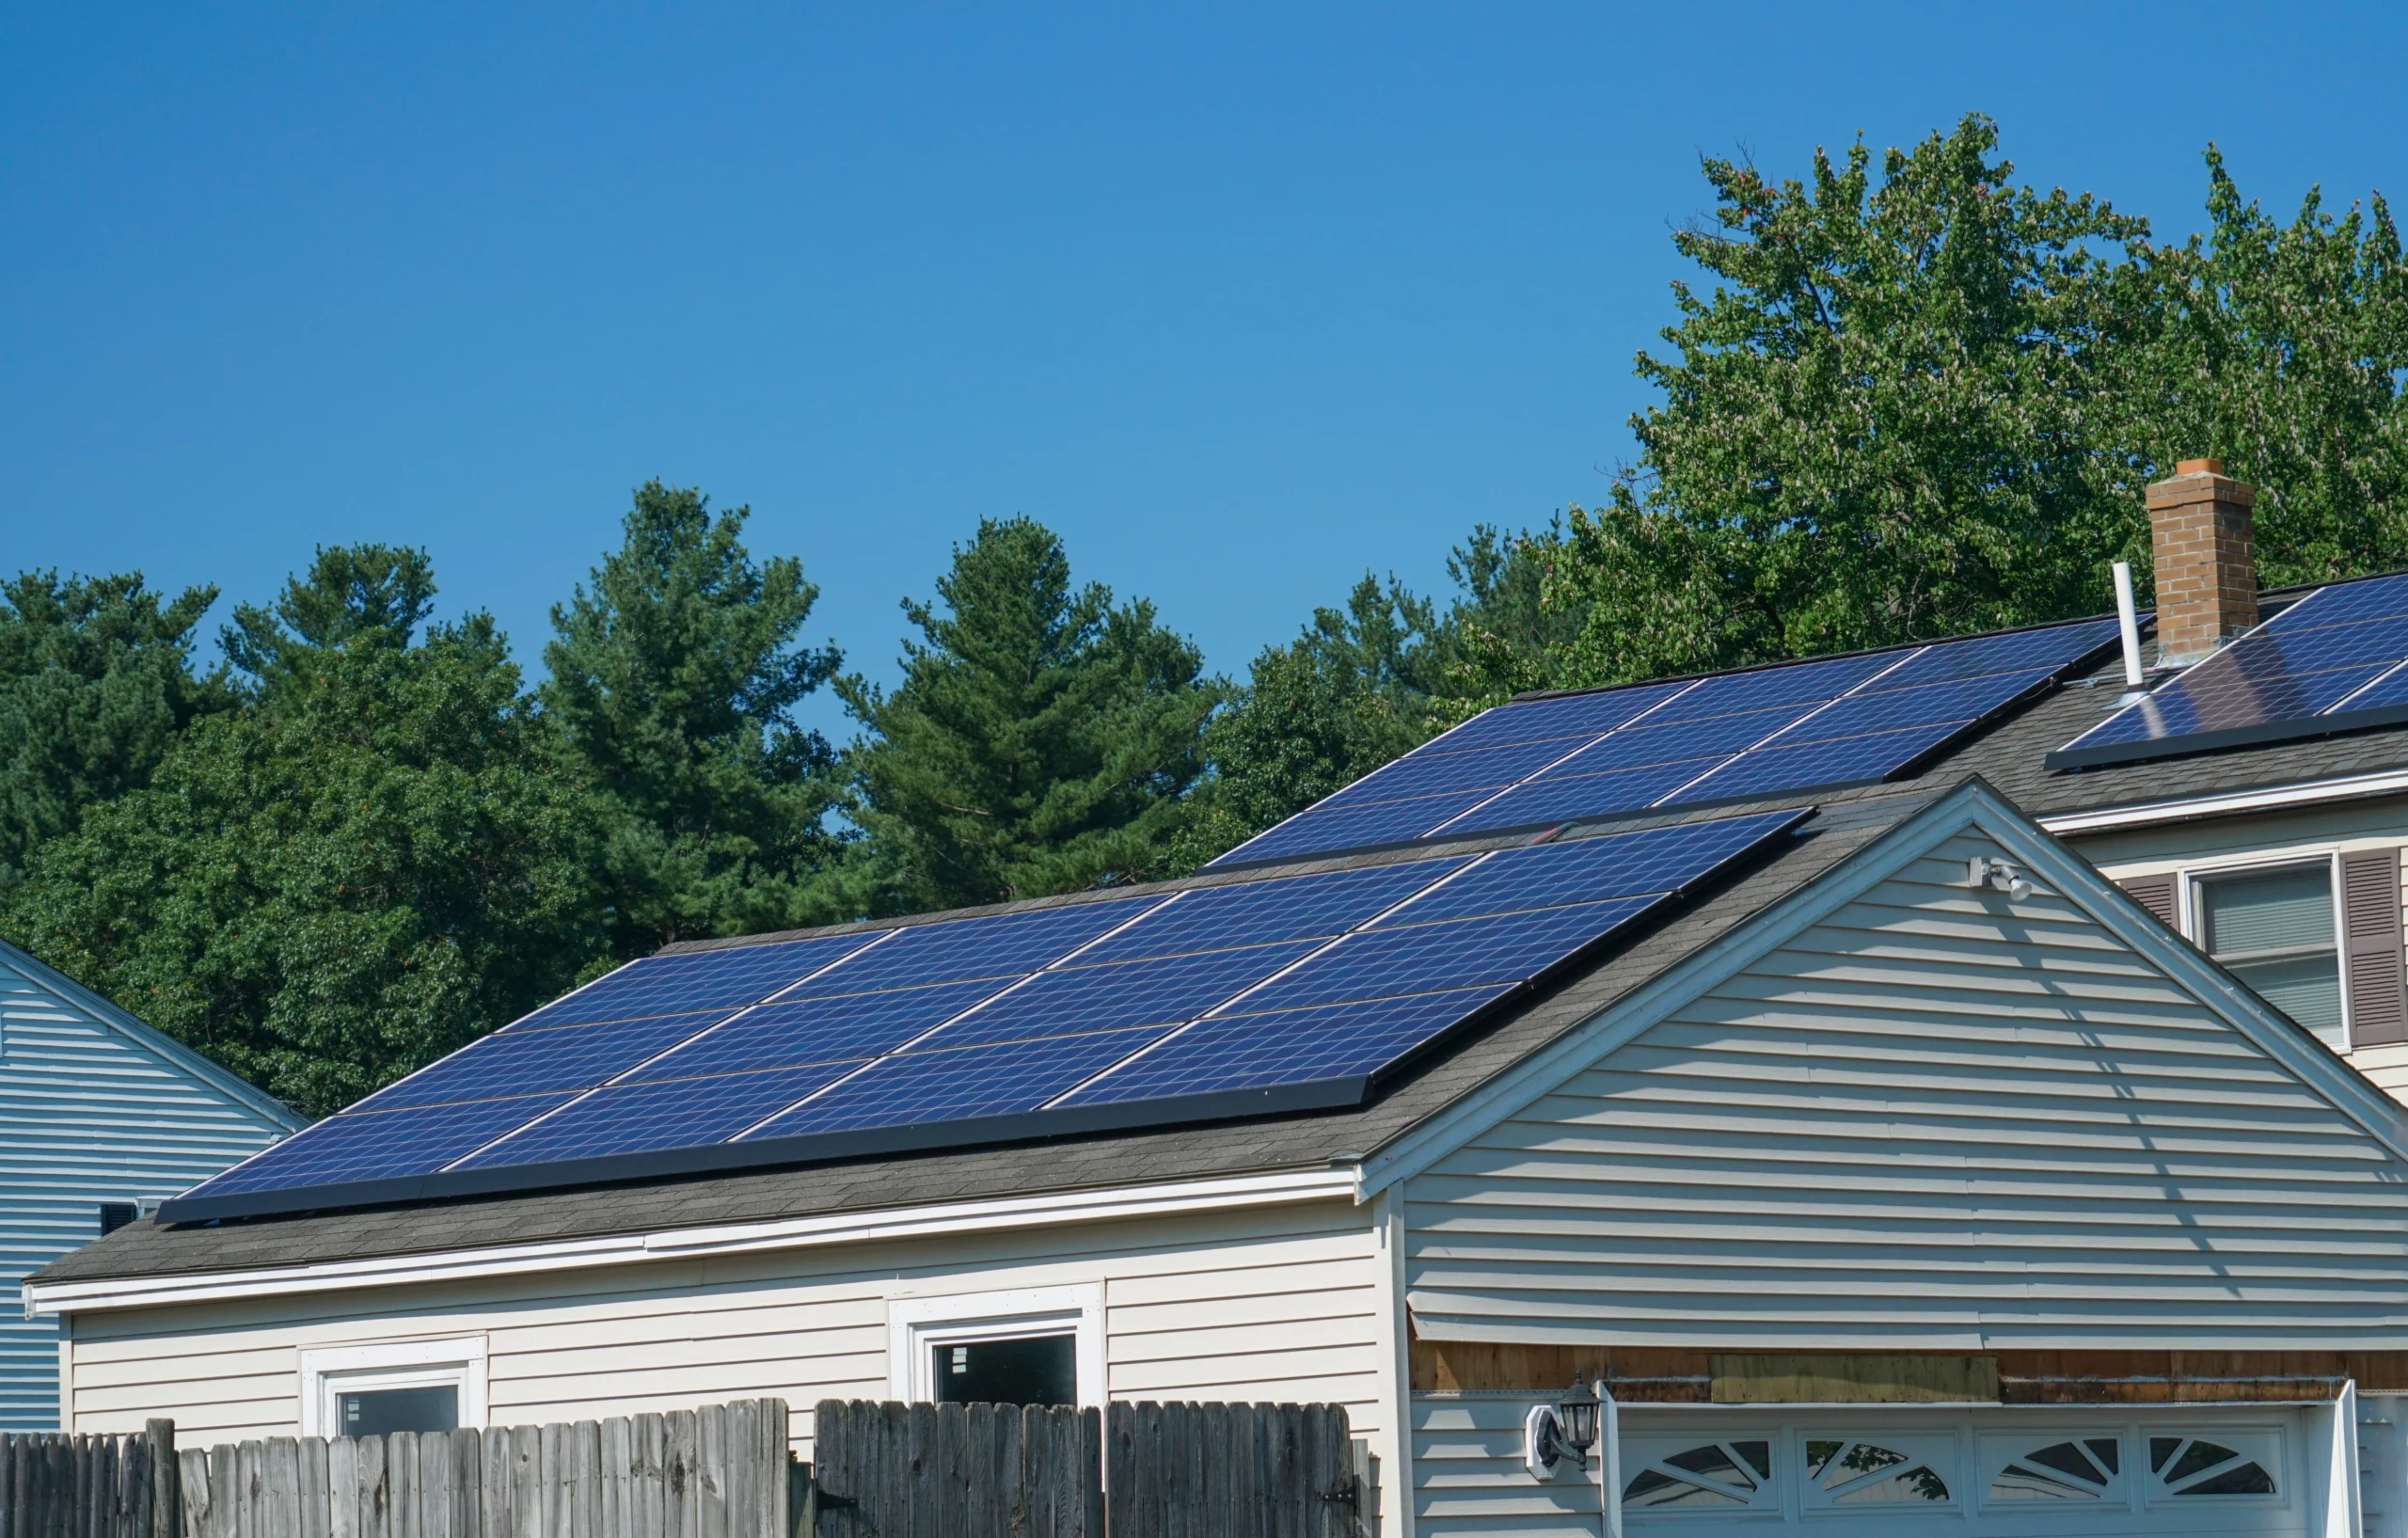 Solar panels on roof of house | Swoosh Finance 